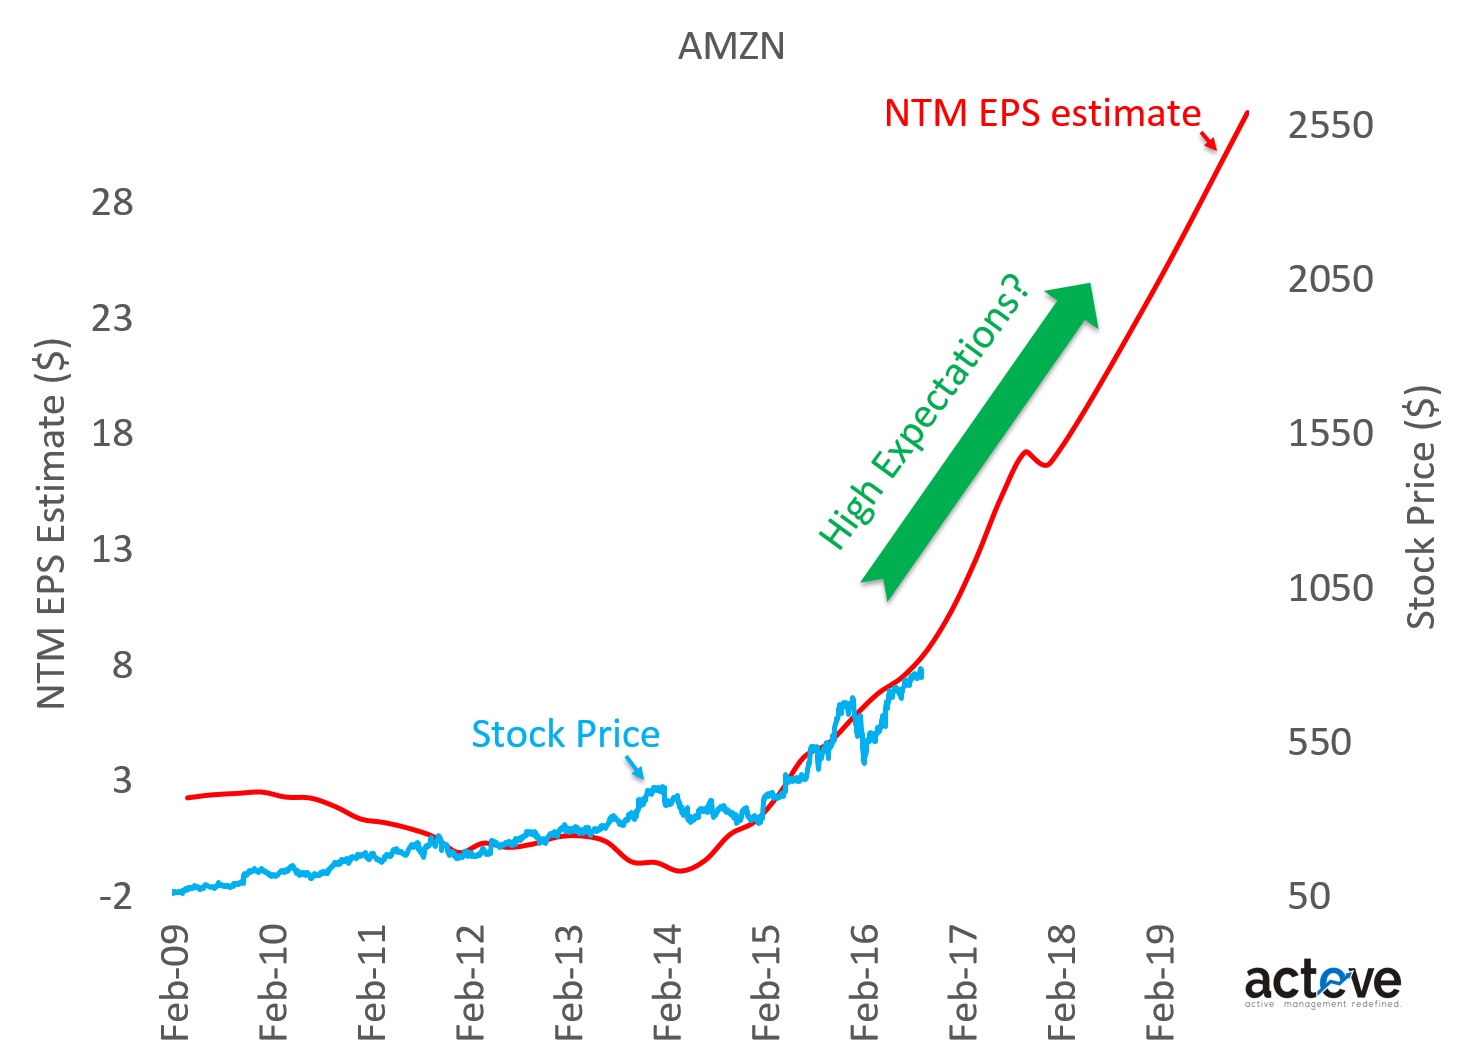 AMZN stock vs. NTM EPS